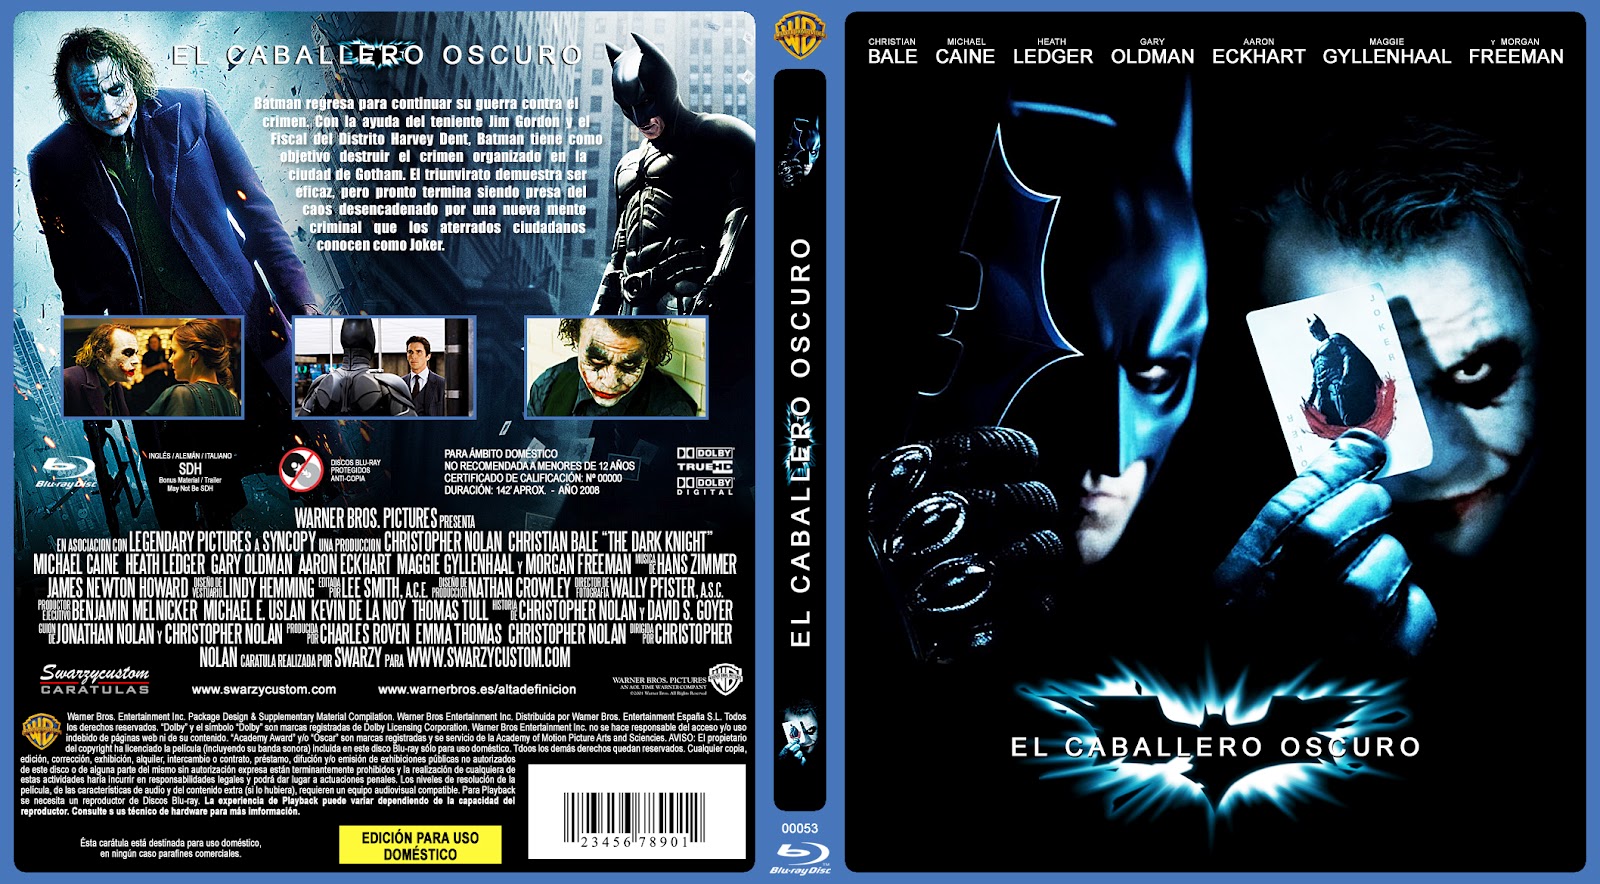 Batman - The Dark Knight - Dvdrip